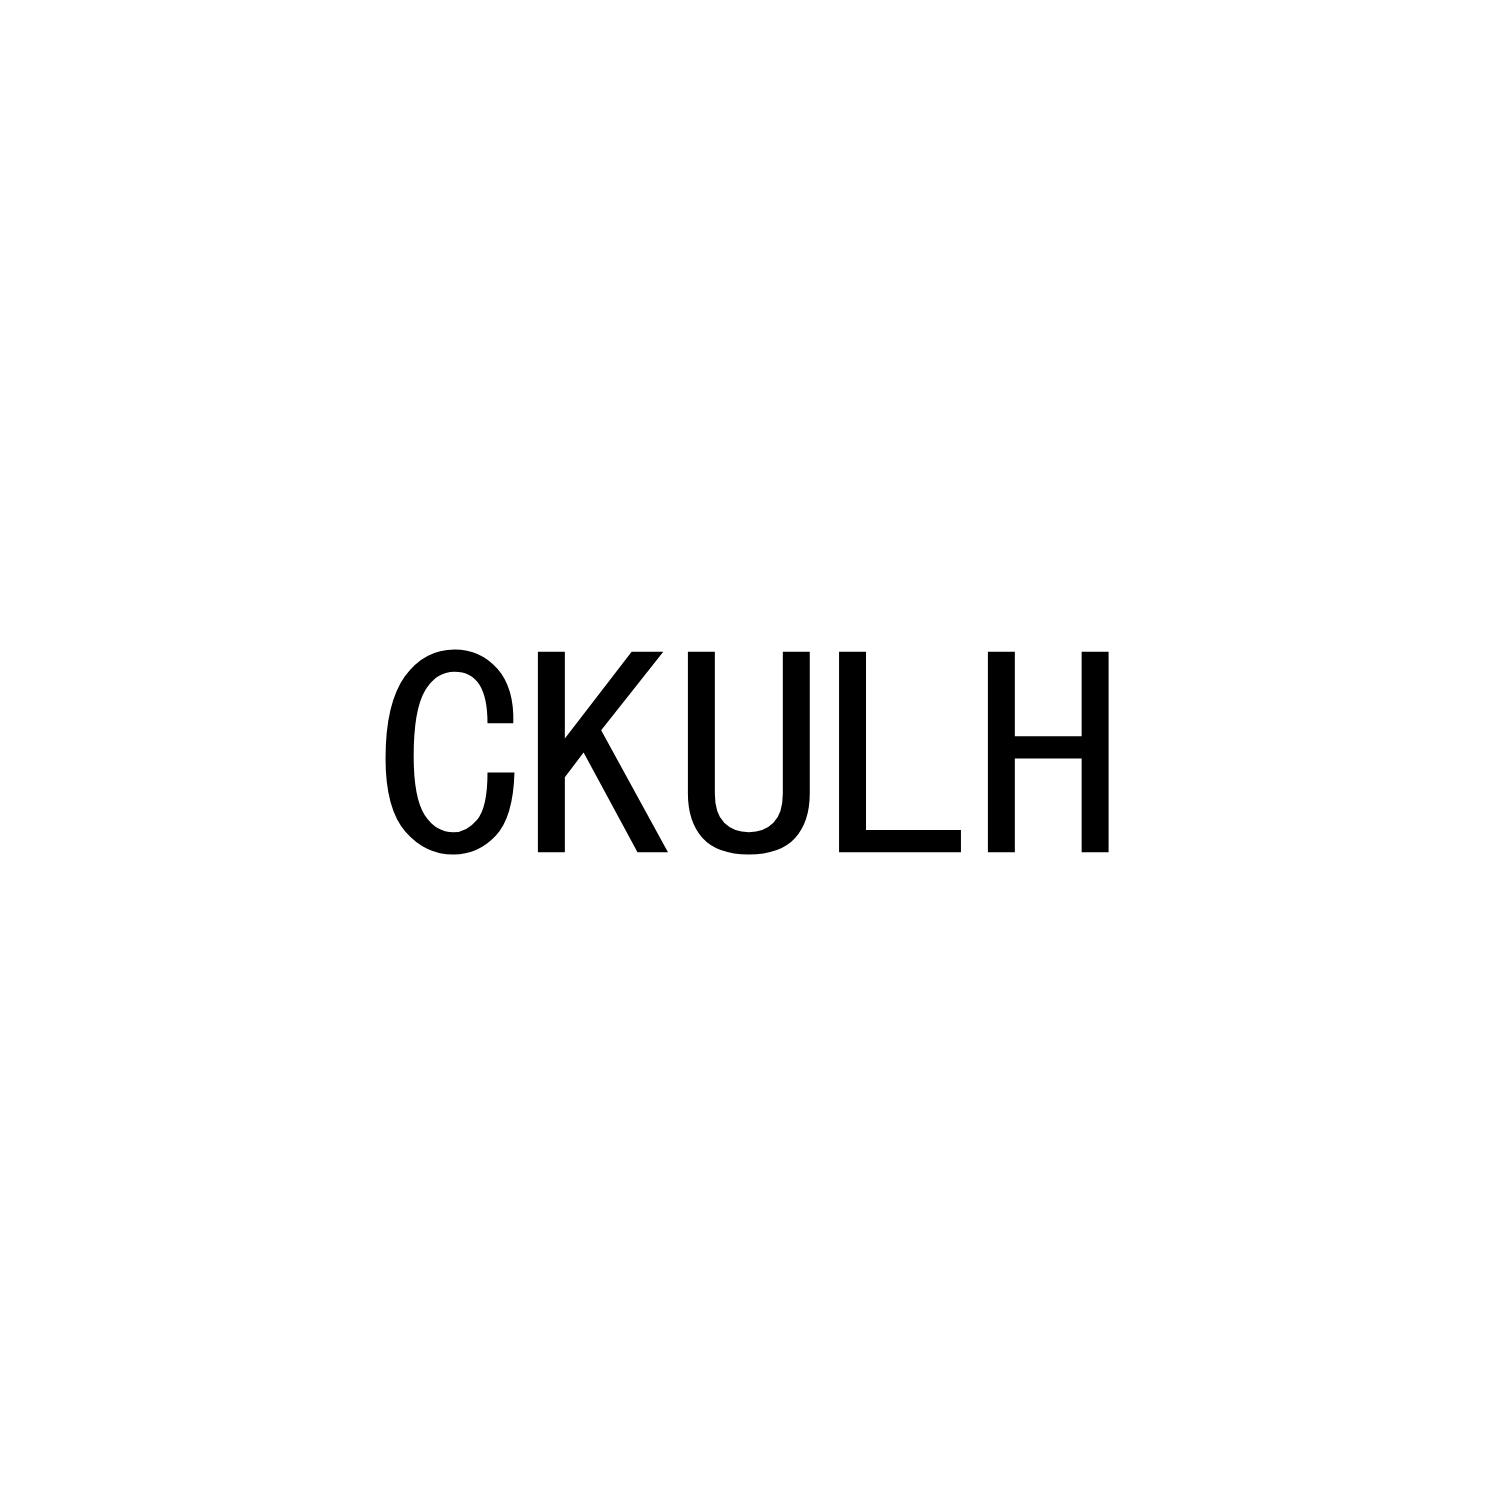 CKULH